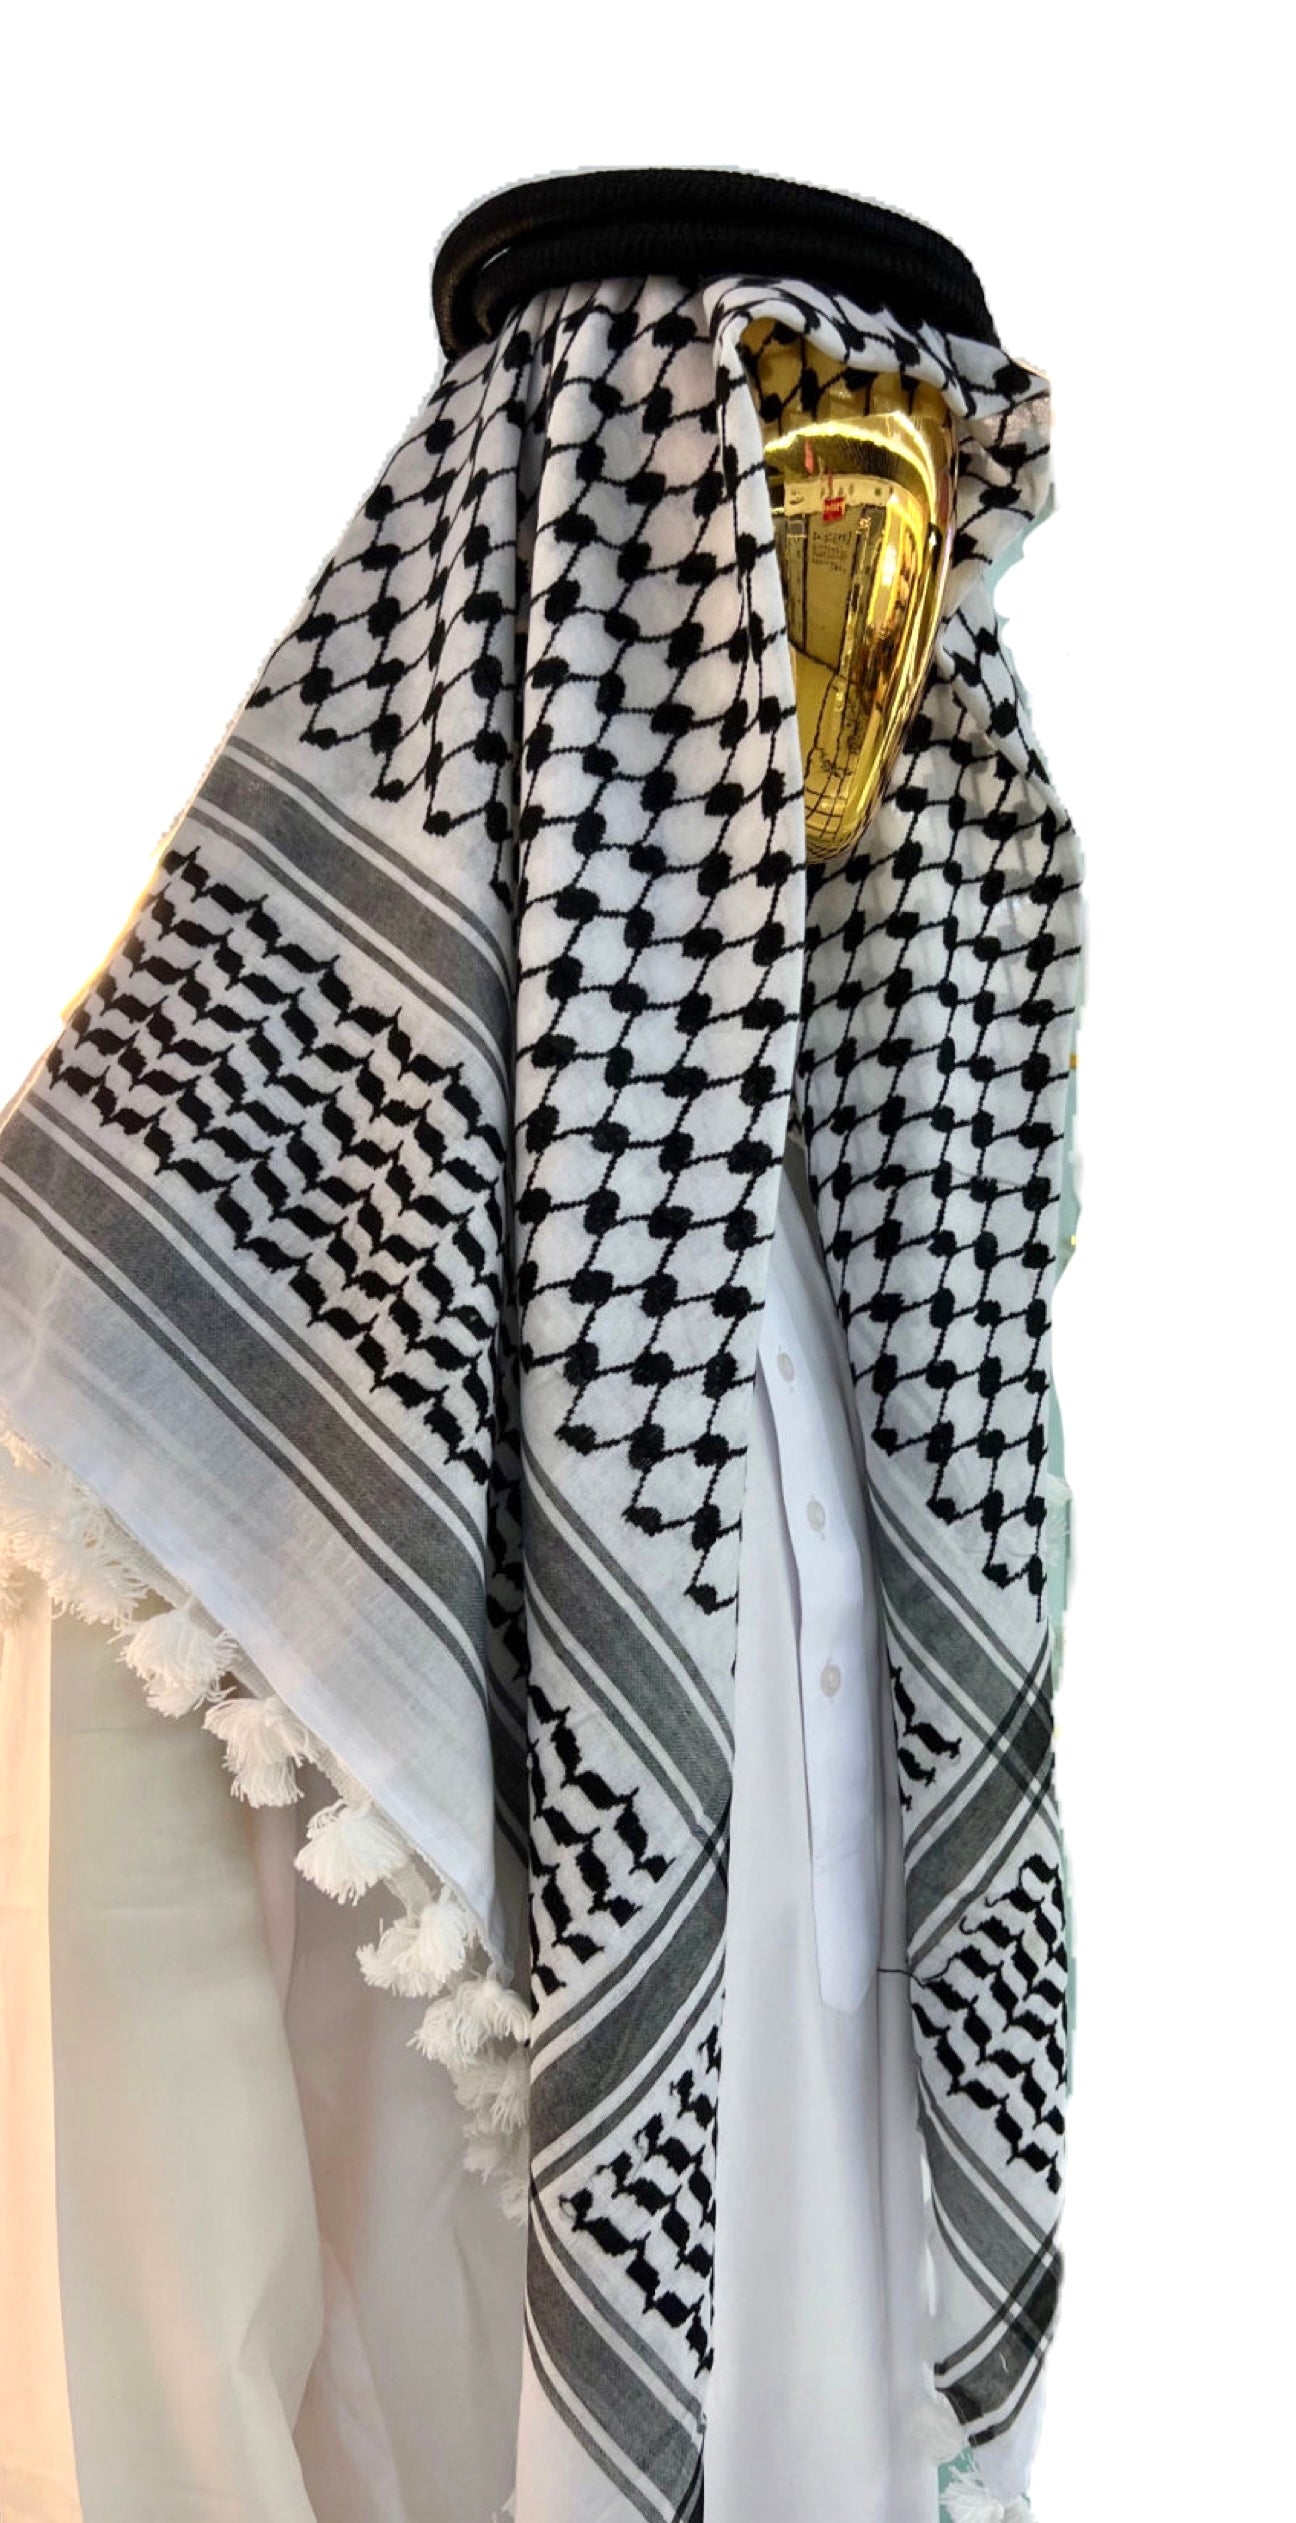 Kufiya/Keffiyeh with White Floss Black-White 127x127 cm + Palestine flag 90x150 cm Combi Deal